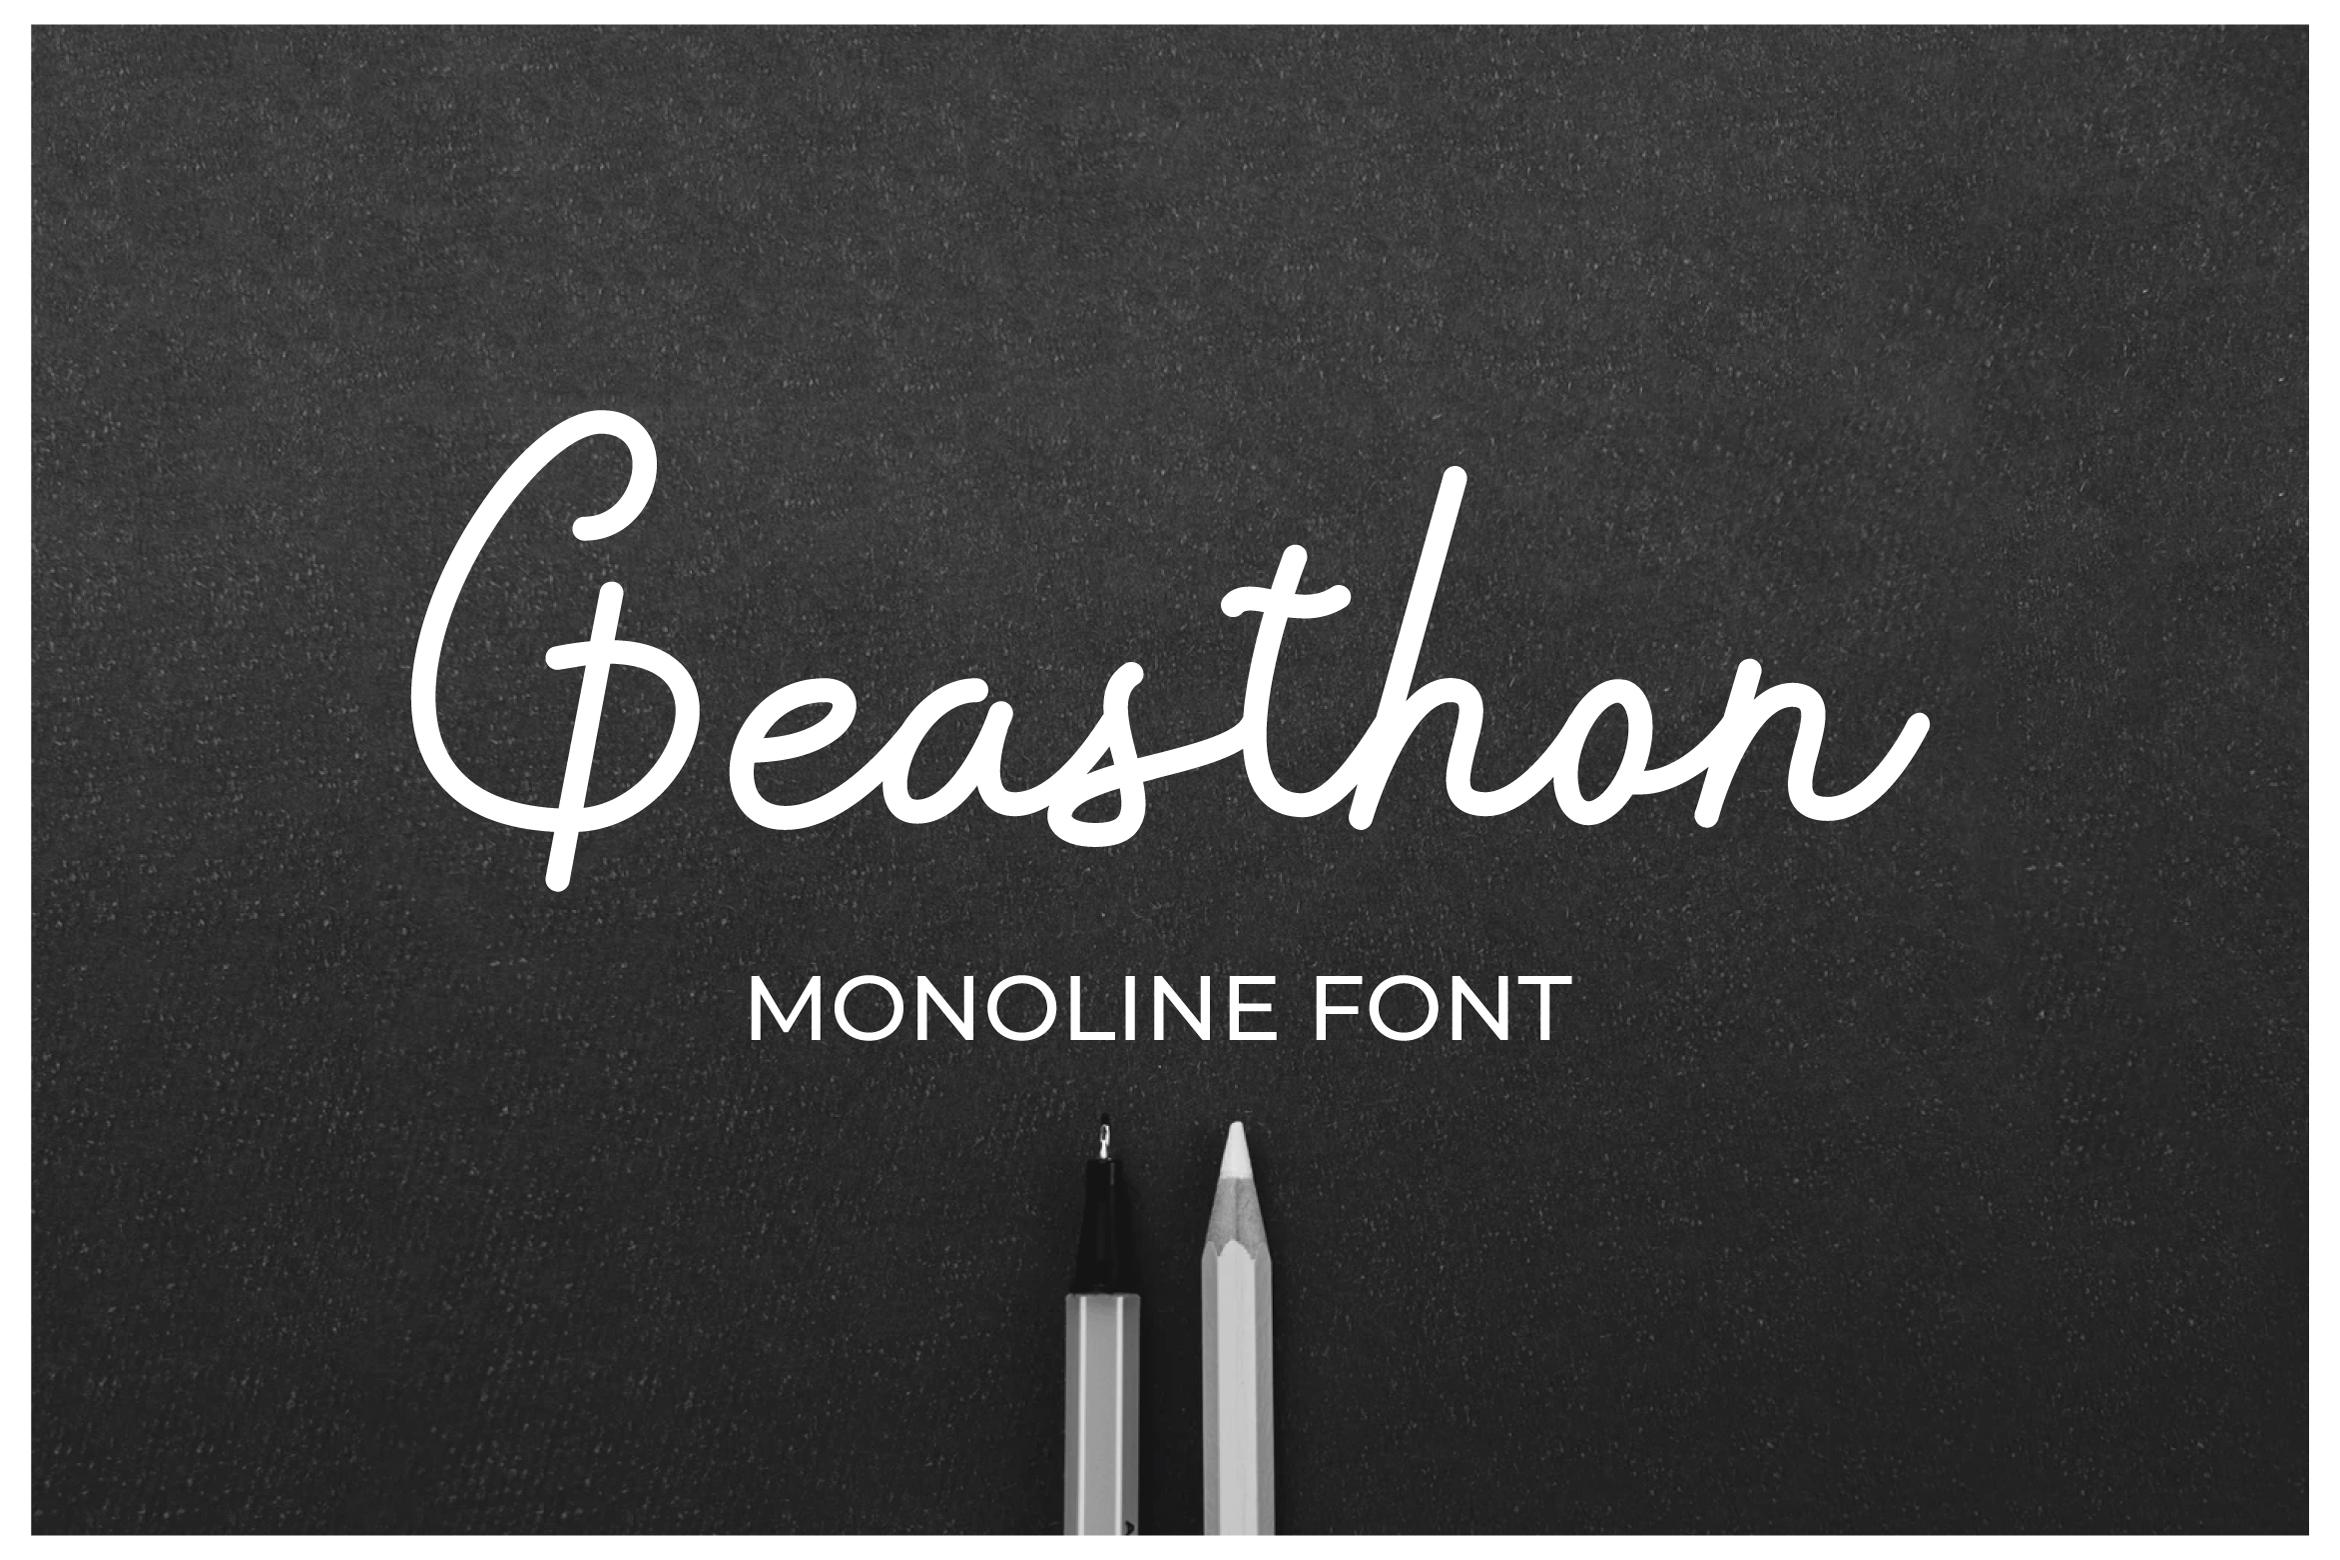 Geasthon Font